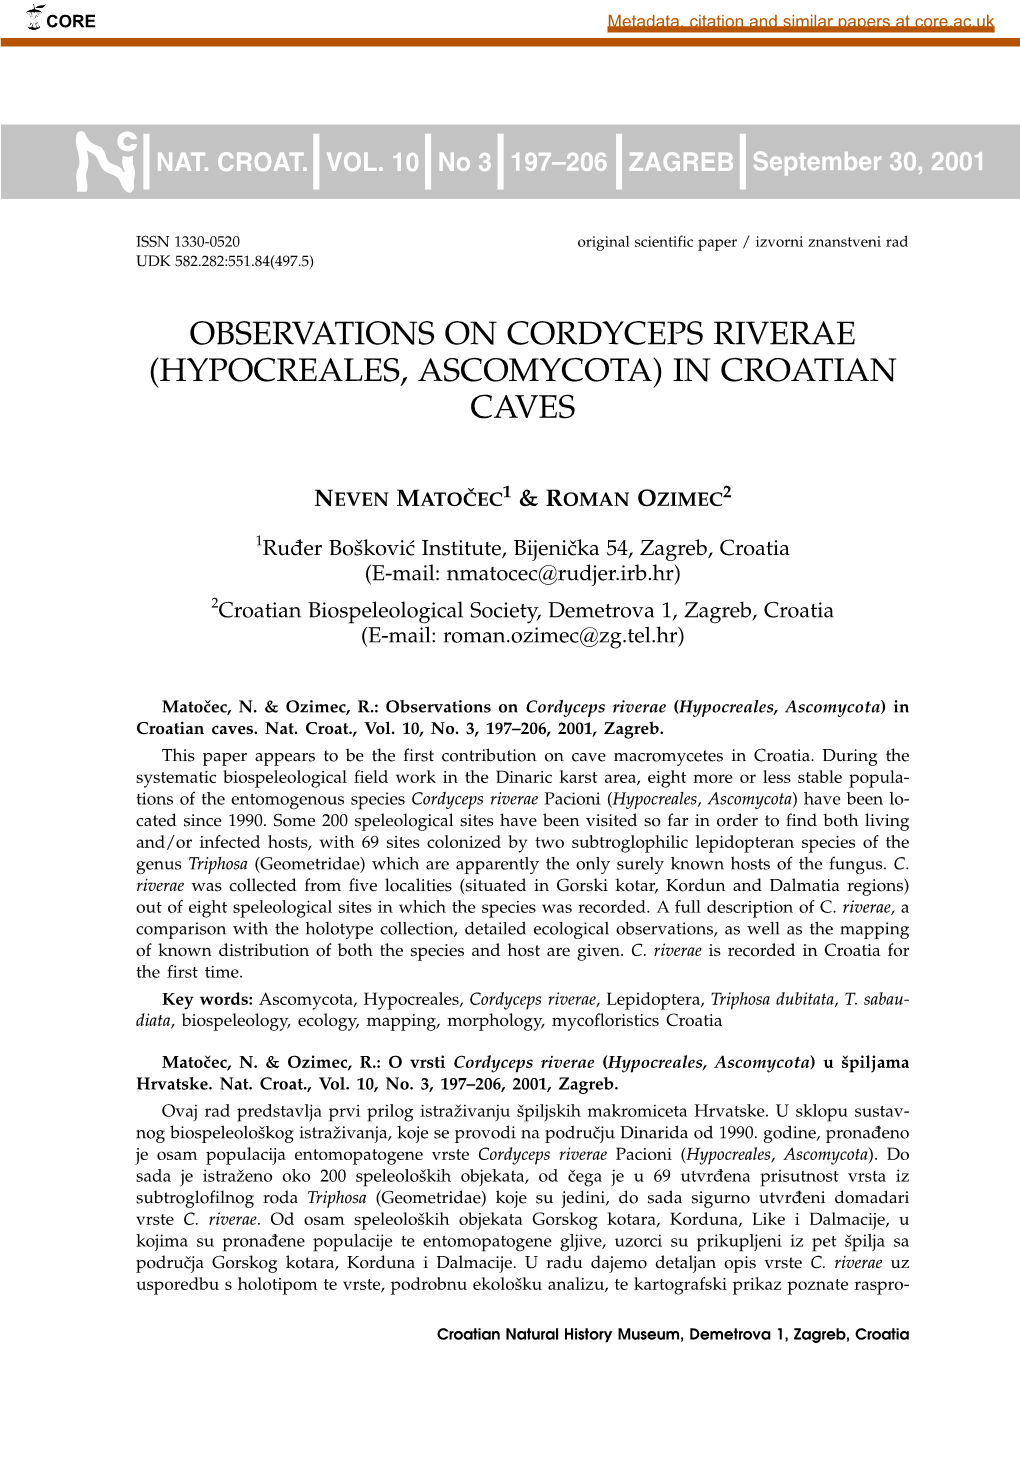 Observations on Cordyceps Riverae (Hypocreales, Ascomycota) in Croatian Caves